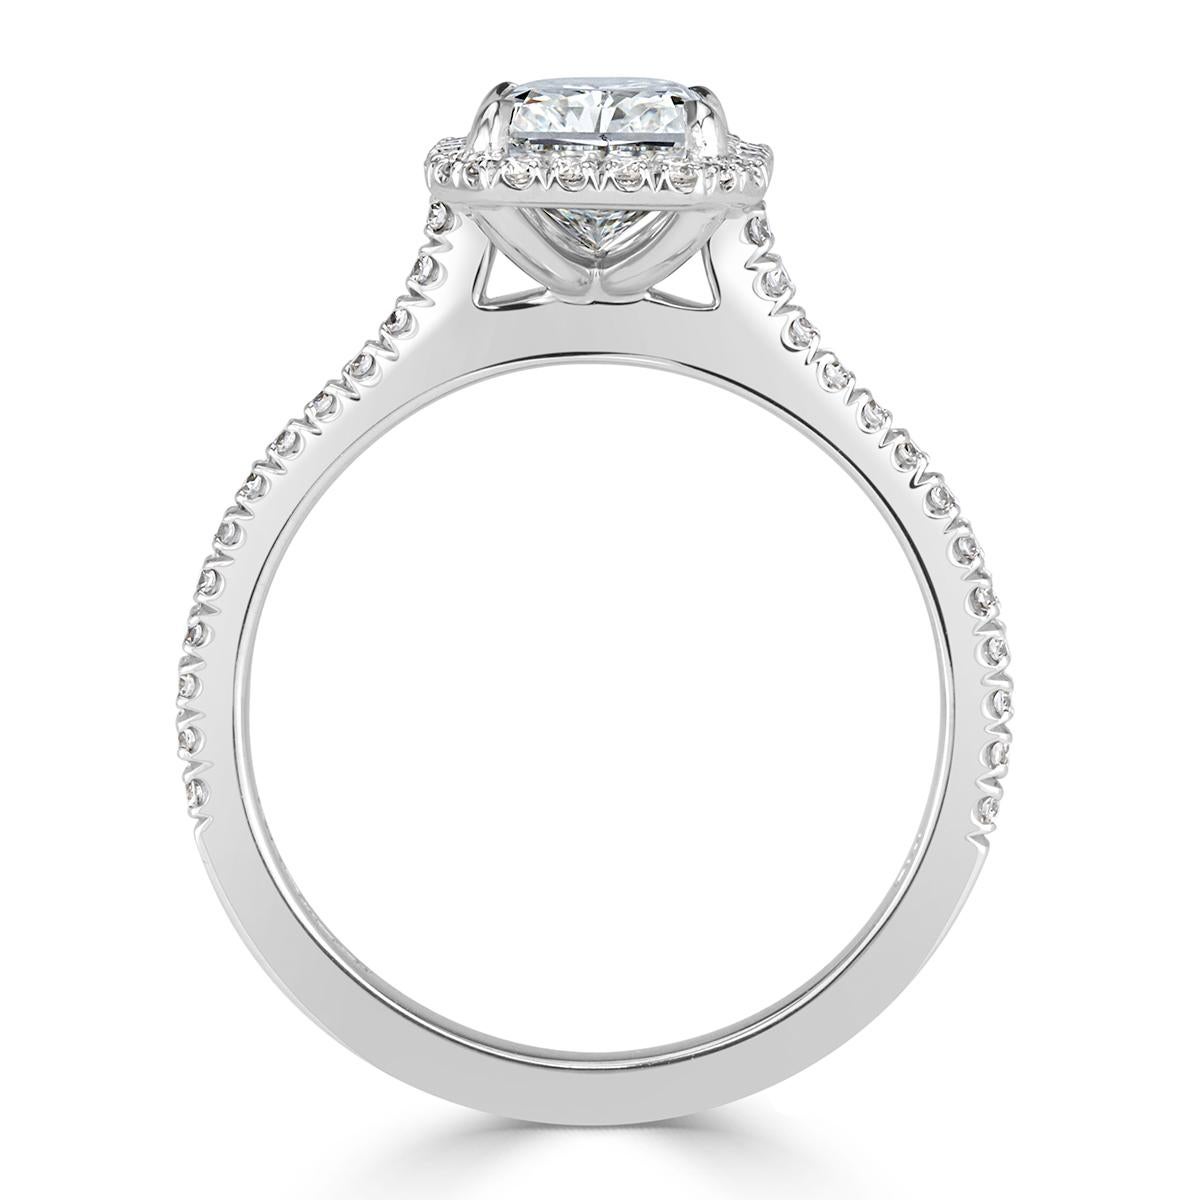 Women's or Men's Mark Broumand 1.93 Carat Radiant Cut Diamond Engagement Ring